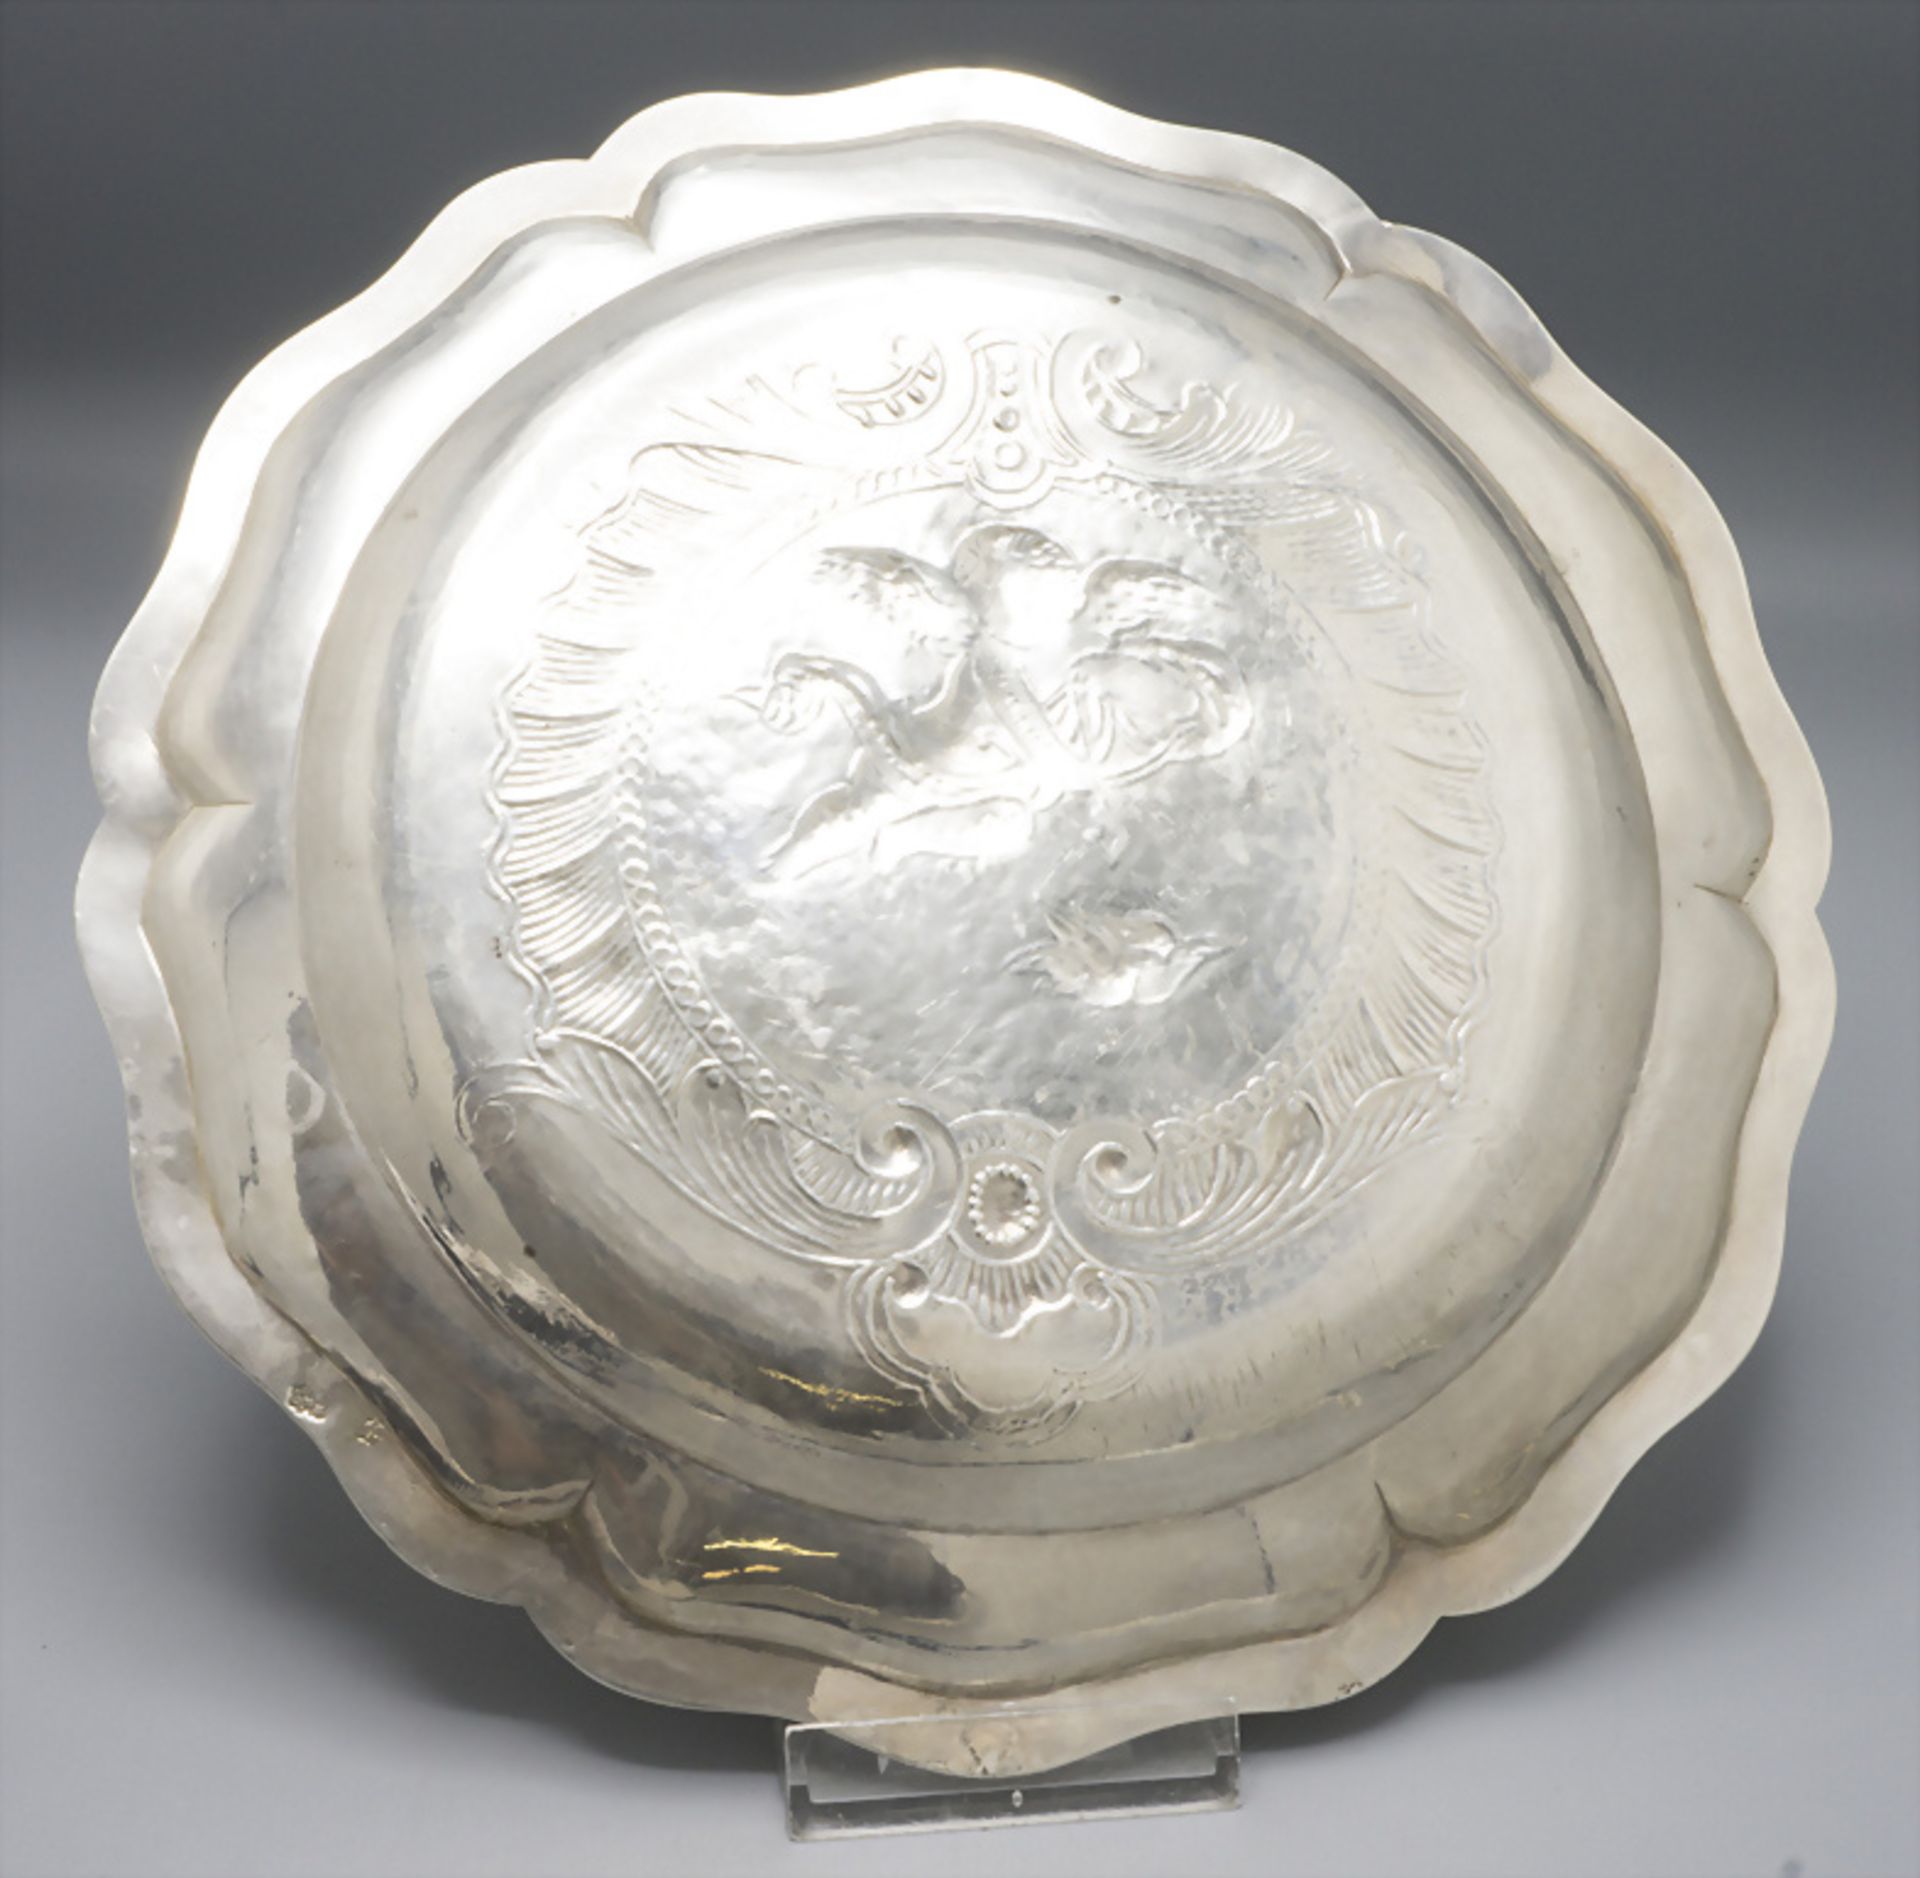 Allianzteller / A silver alliance plate, Claude Genu, Paris, 1744-1750 - Image 5 of 9